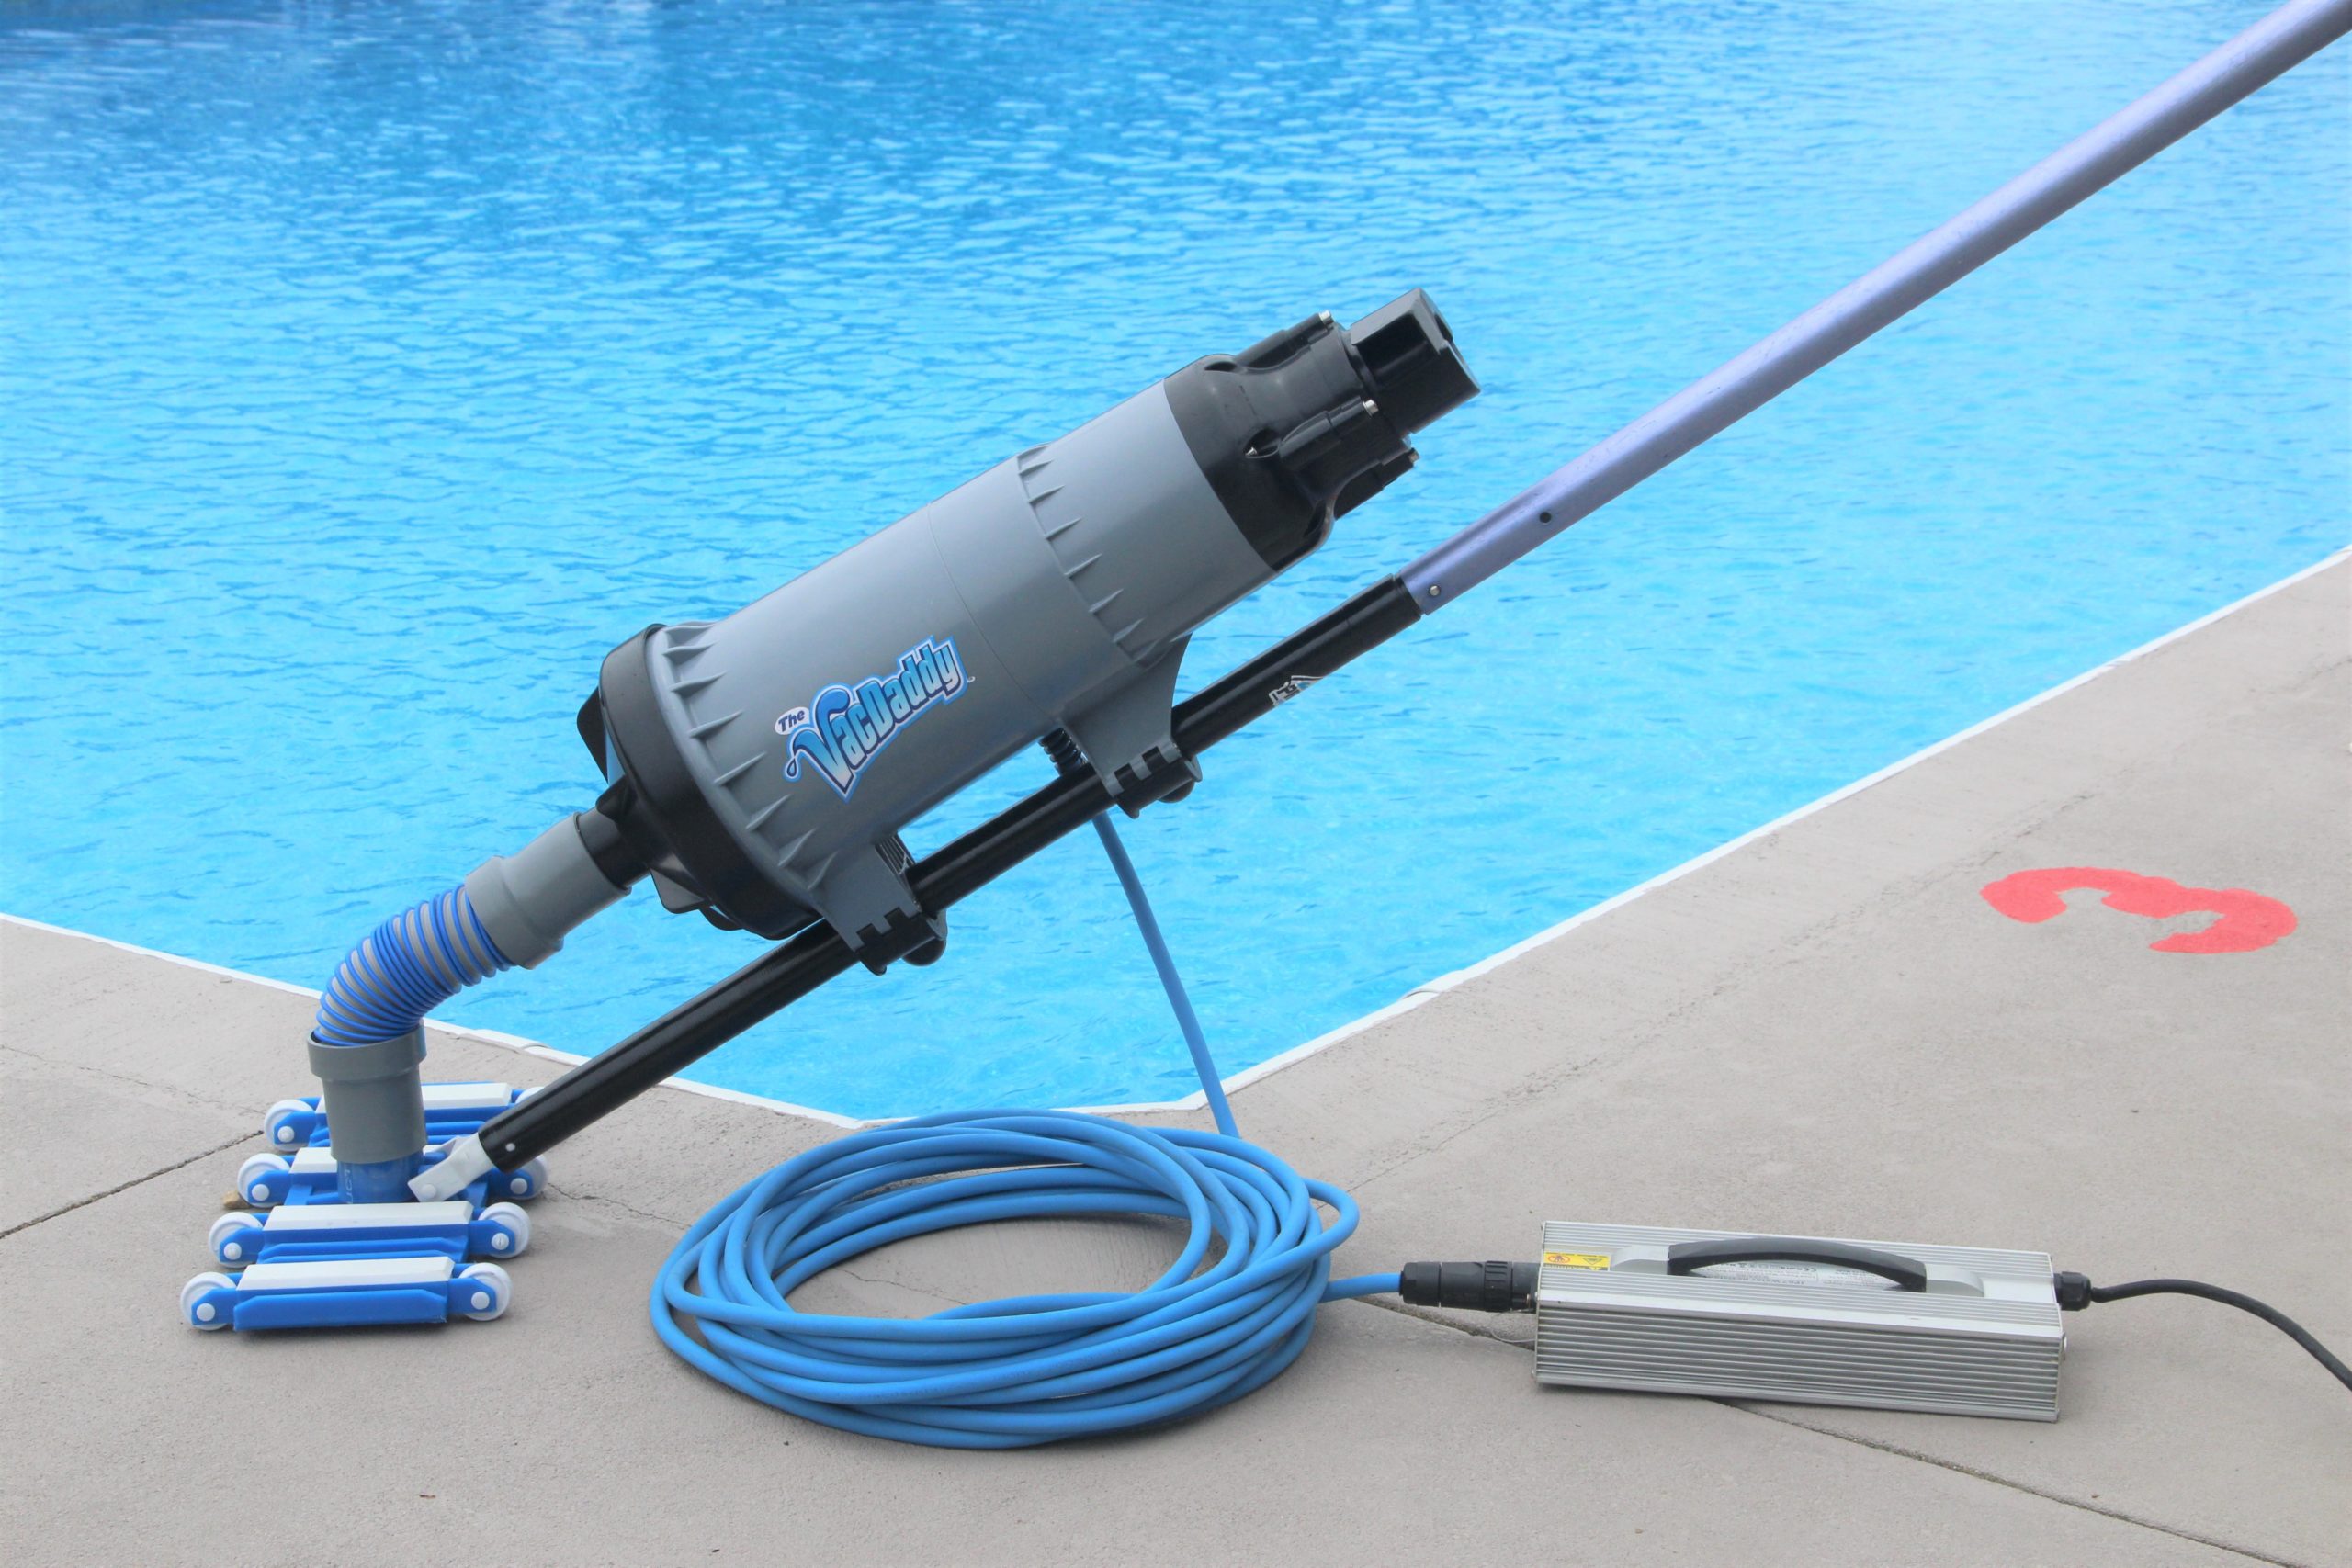 power manual vacuum for a pool